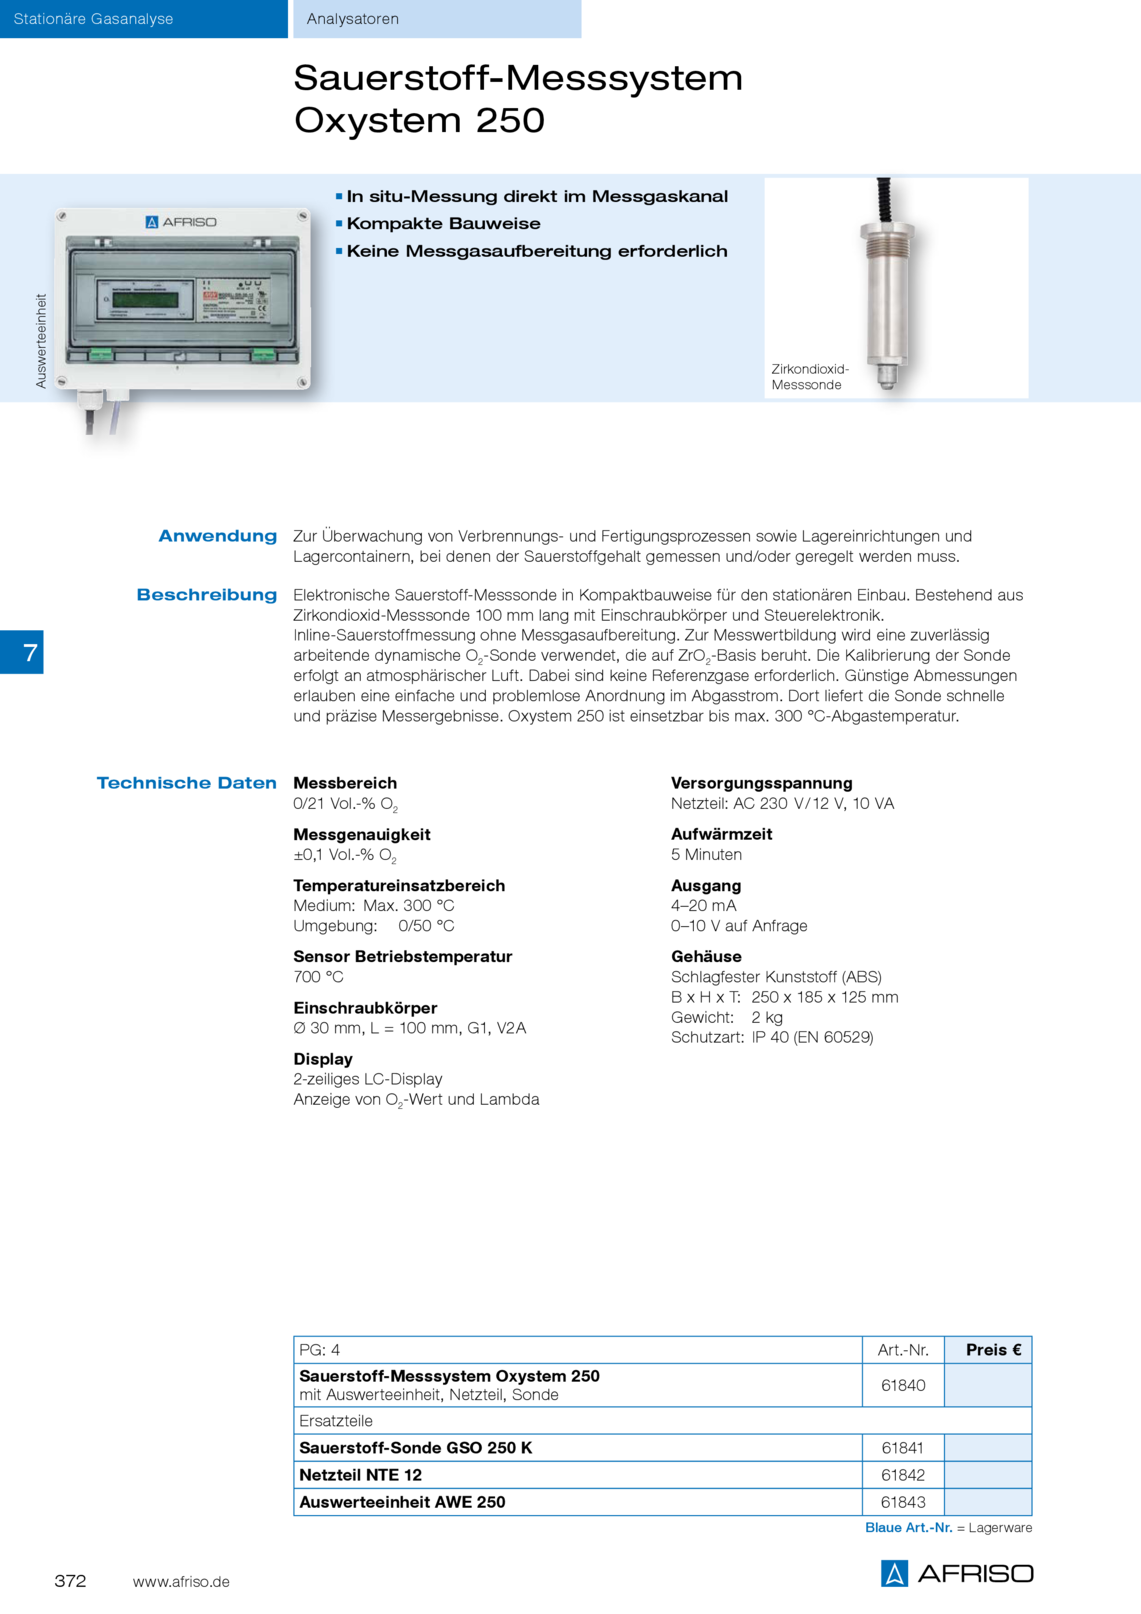 Afriso Sauerstoff-Messsystem Oxystem 250